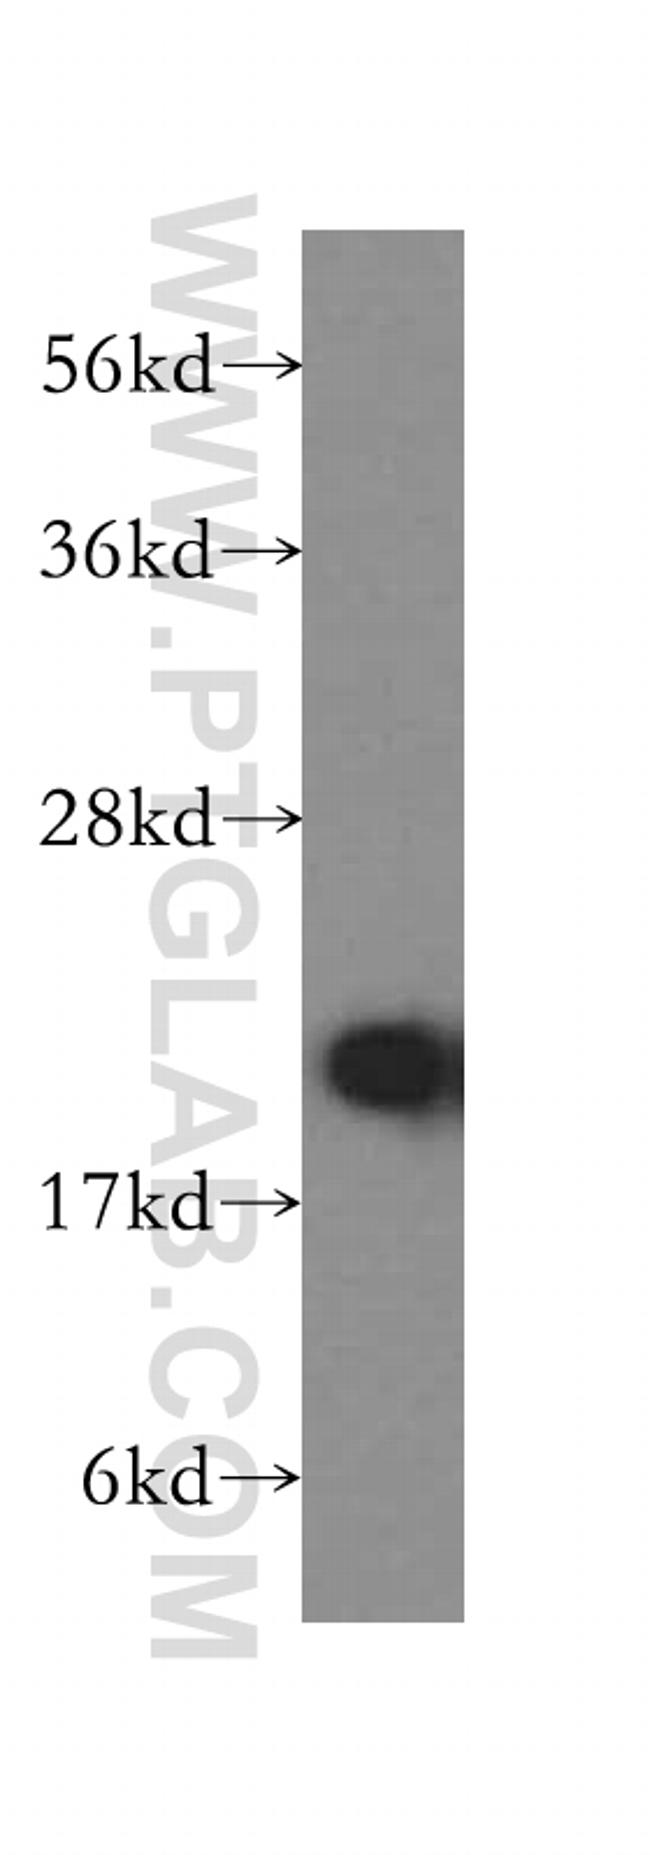 RPL11 Antibody in Western Blot (WB)